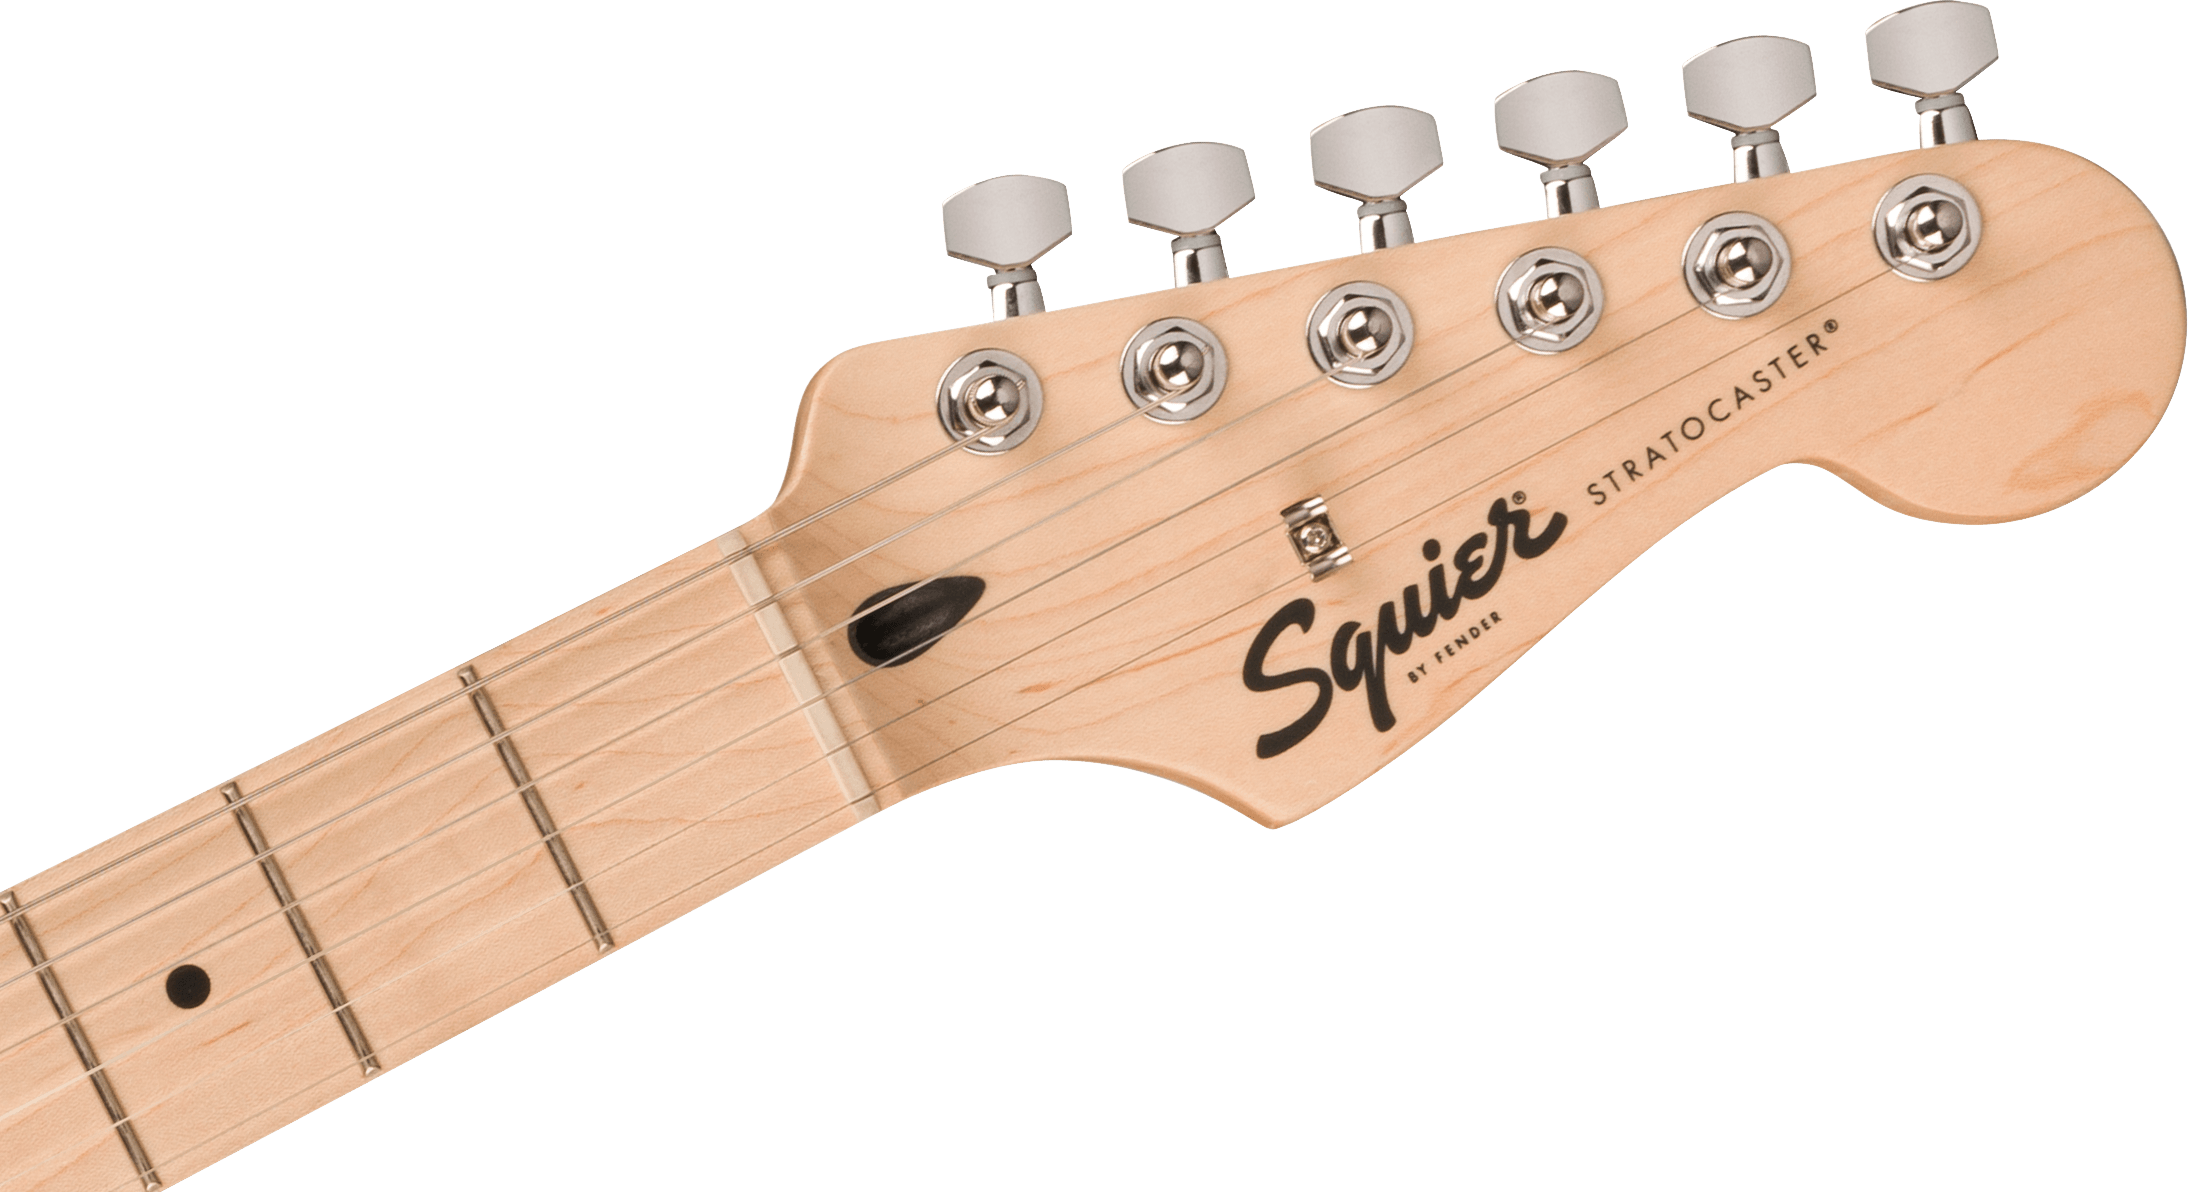 Squier Sonic™ Stratocaster®, Maple Fingerboard, White Pickguard, Black